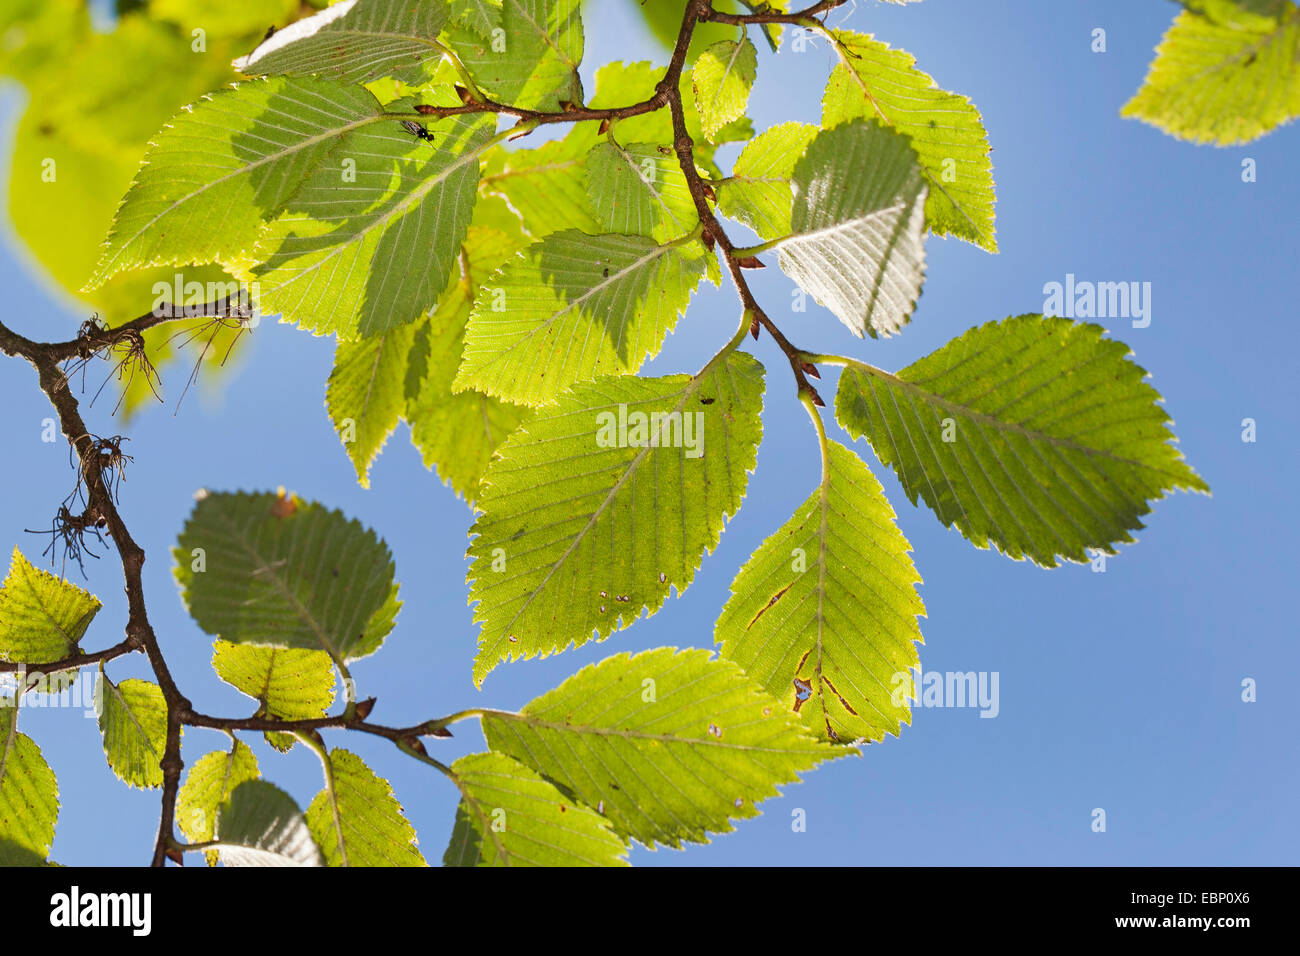 European elm, European White Elm, Fluttering Elm, Spreading Elm, Russian Elm (Ulmus laevis, Ulmus effusa), branch against blue sky, Germany Stock Photo